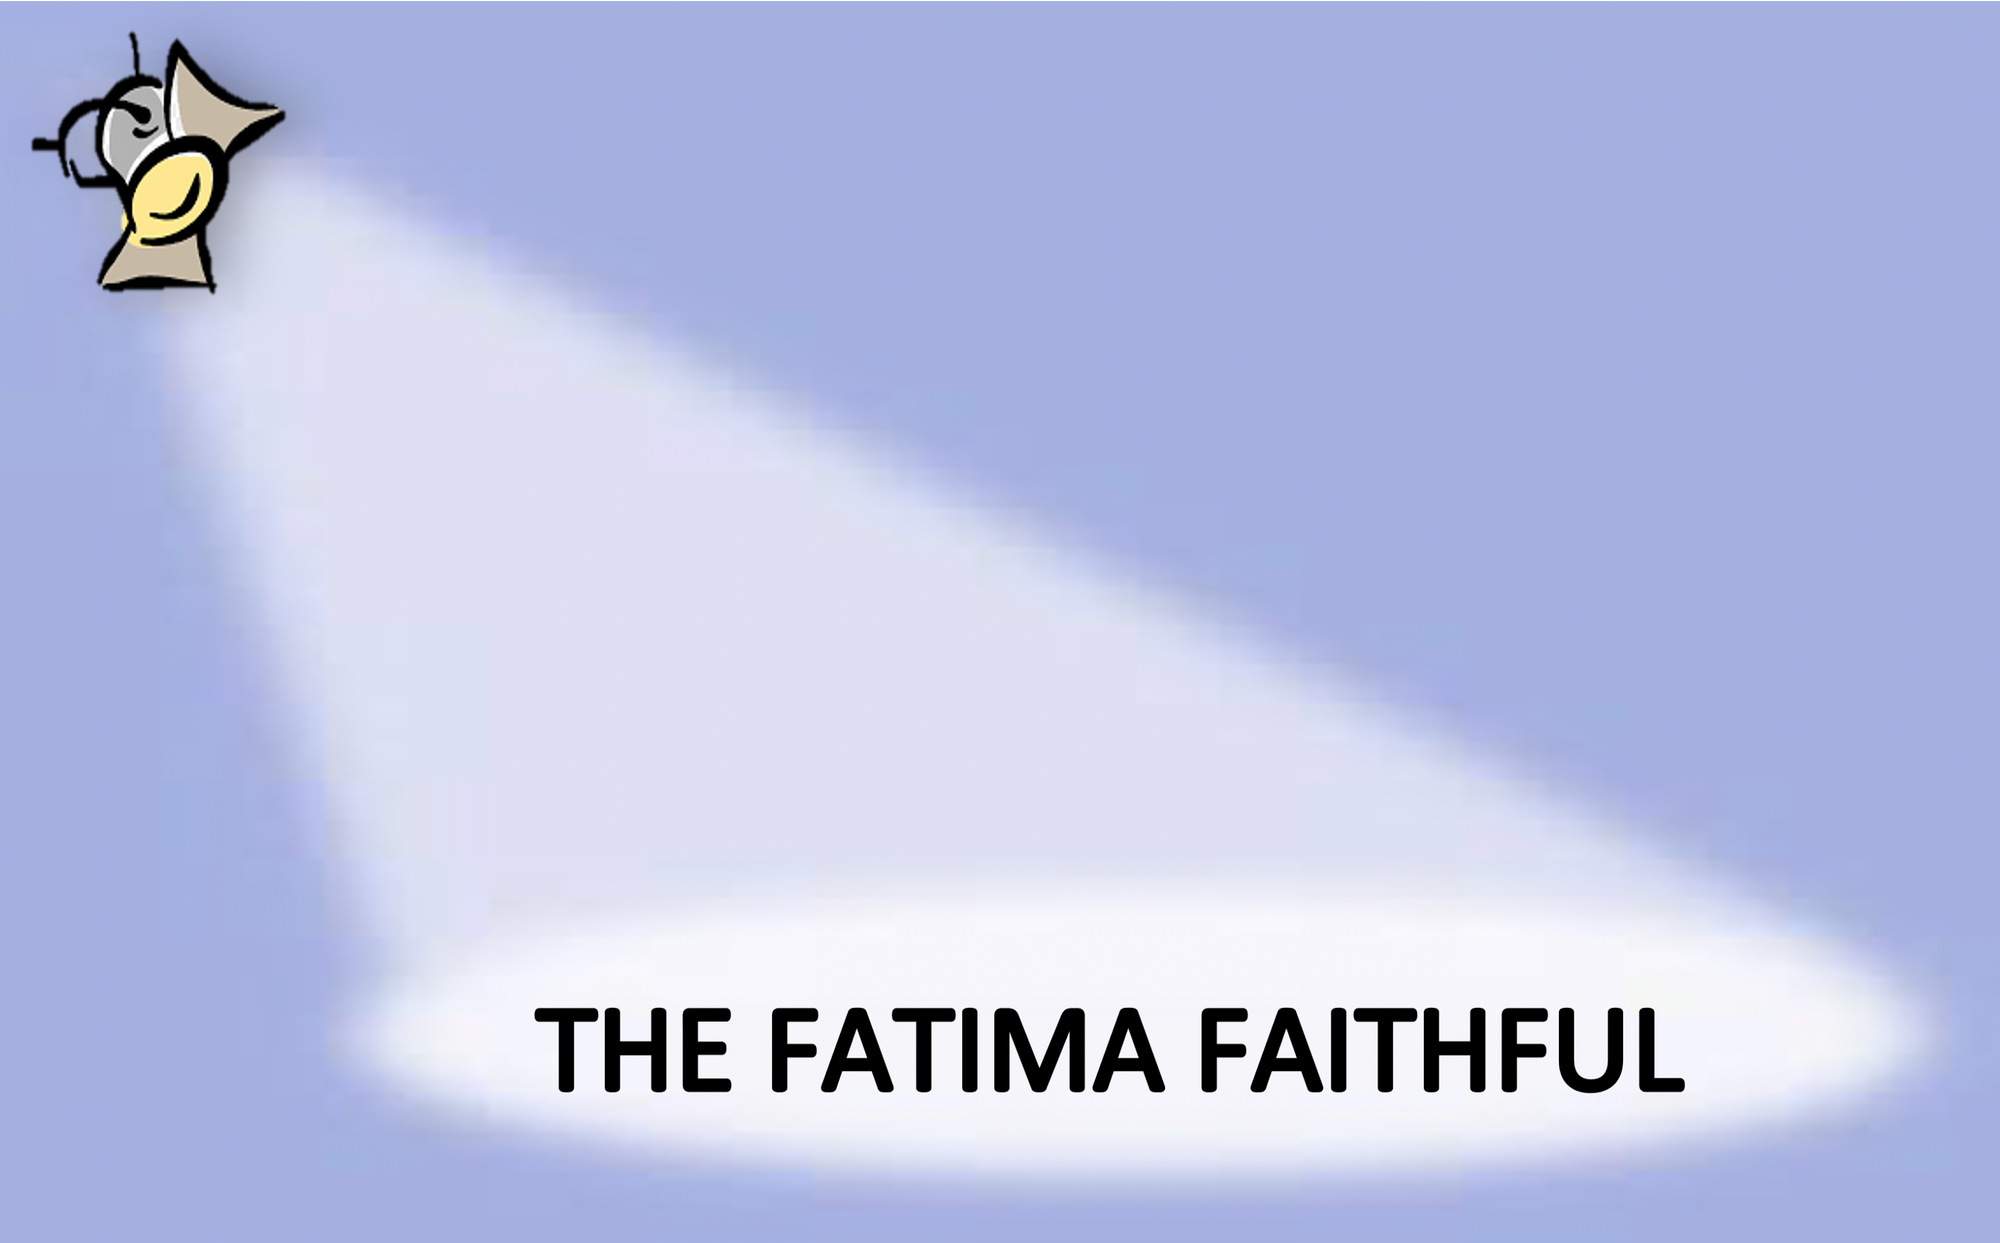 October Issue of The Fatima Faithful